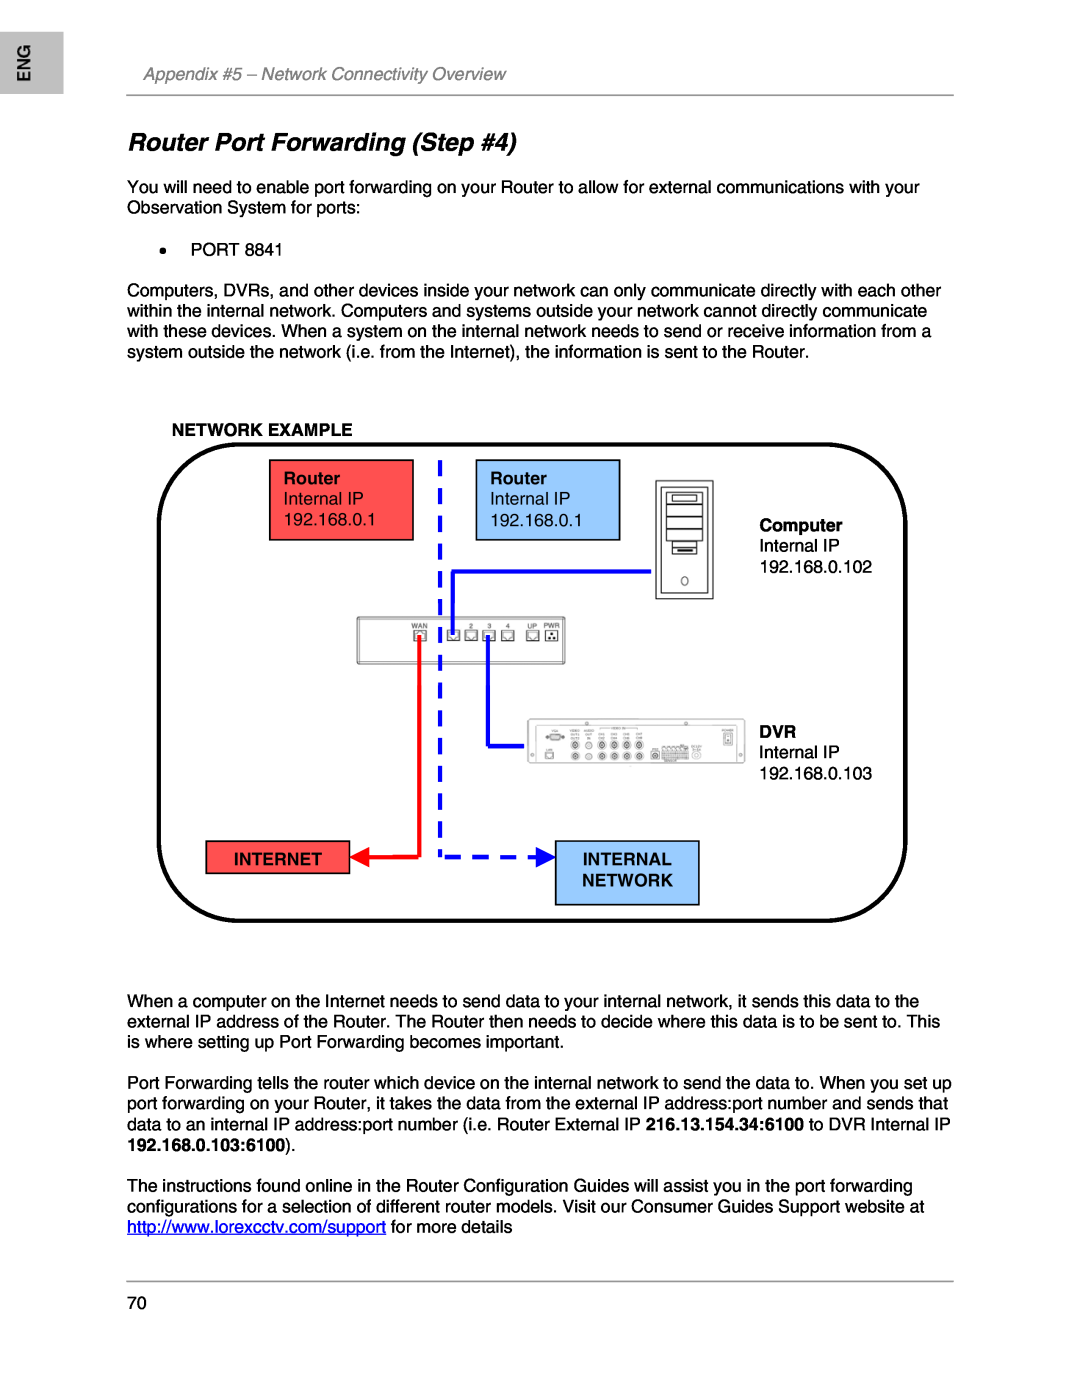 LOREX Technology L208 Router Port Forwarding Step #4, Appendix #5 - Network Connectivity Overview, Router Internal IP 